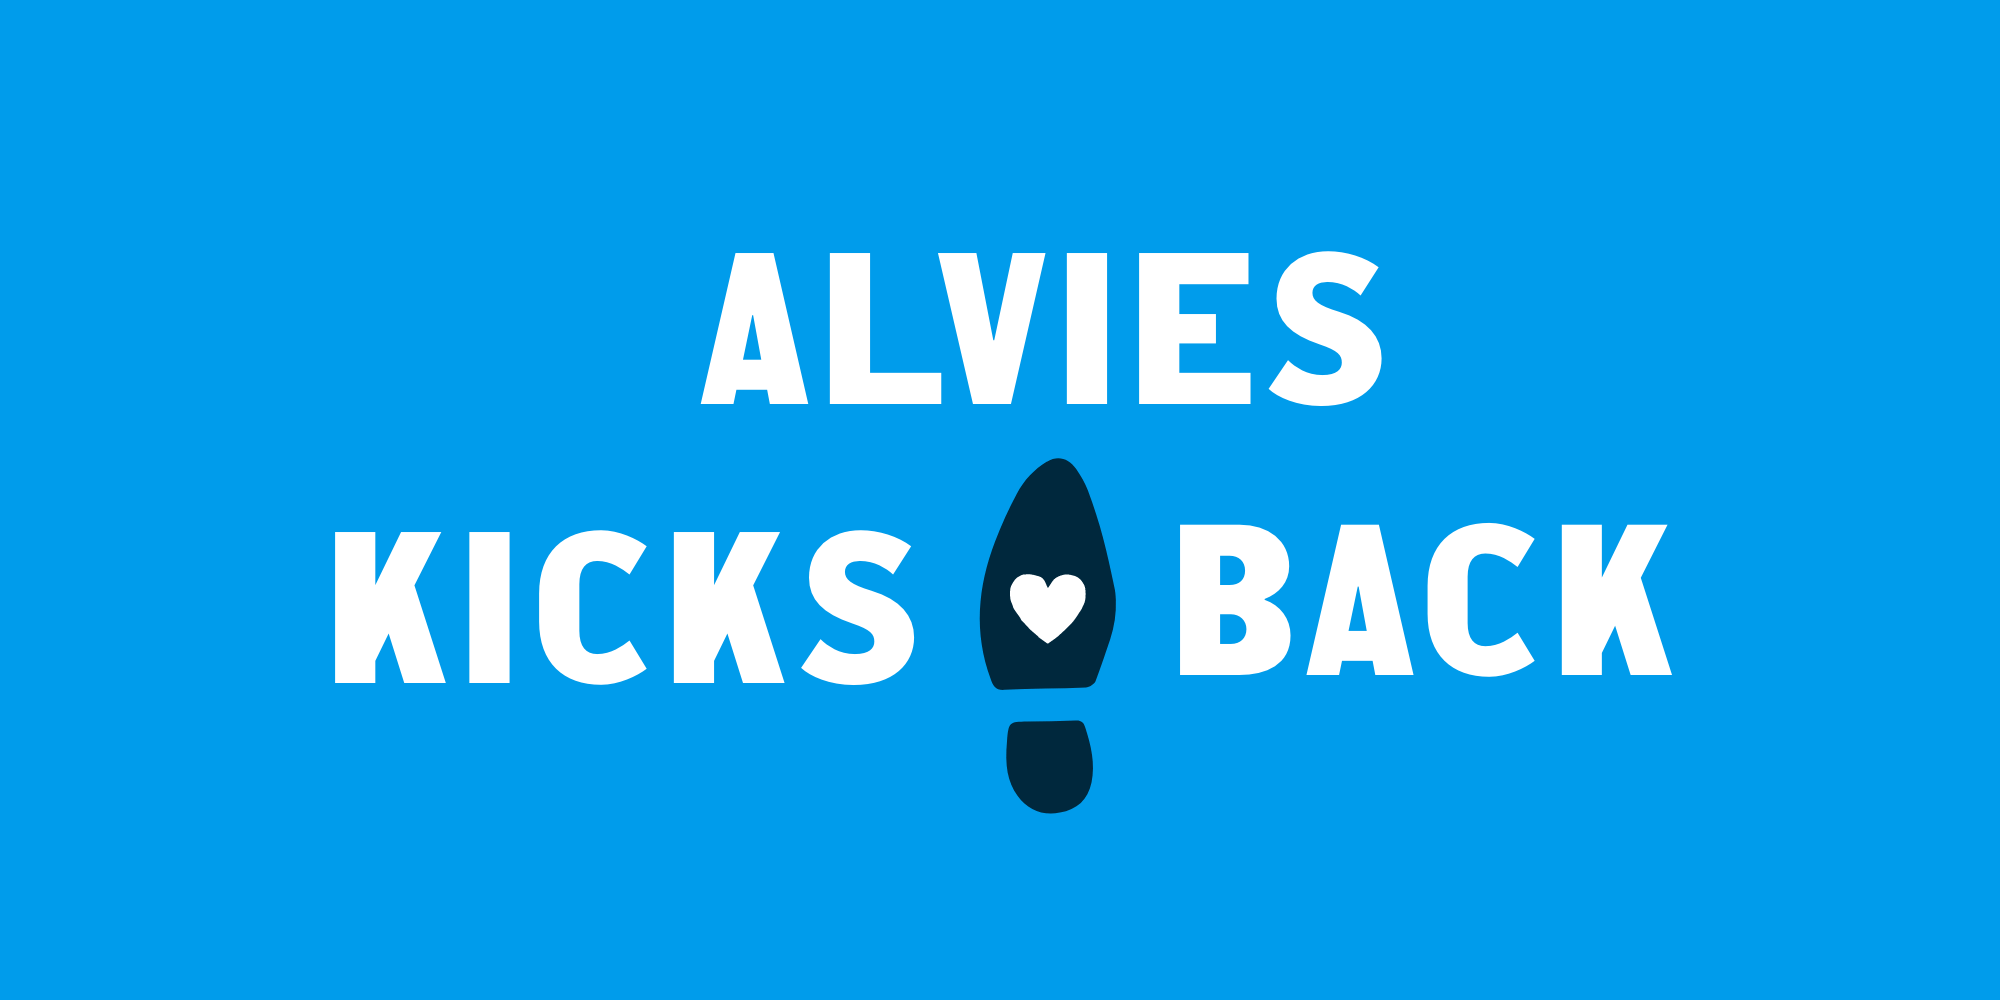 Introducing Alvies Kicks Back: Our Corporate Giving Program - Alvies